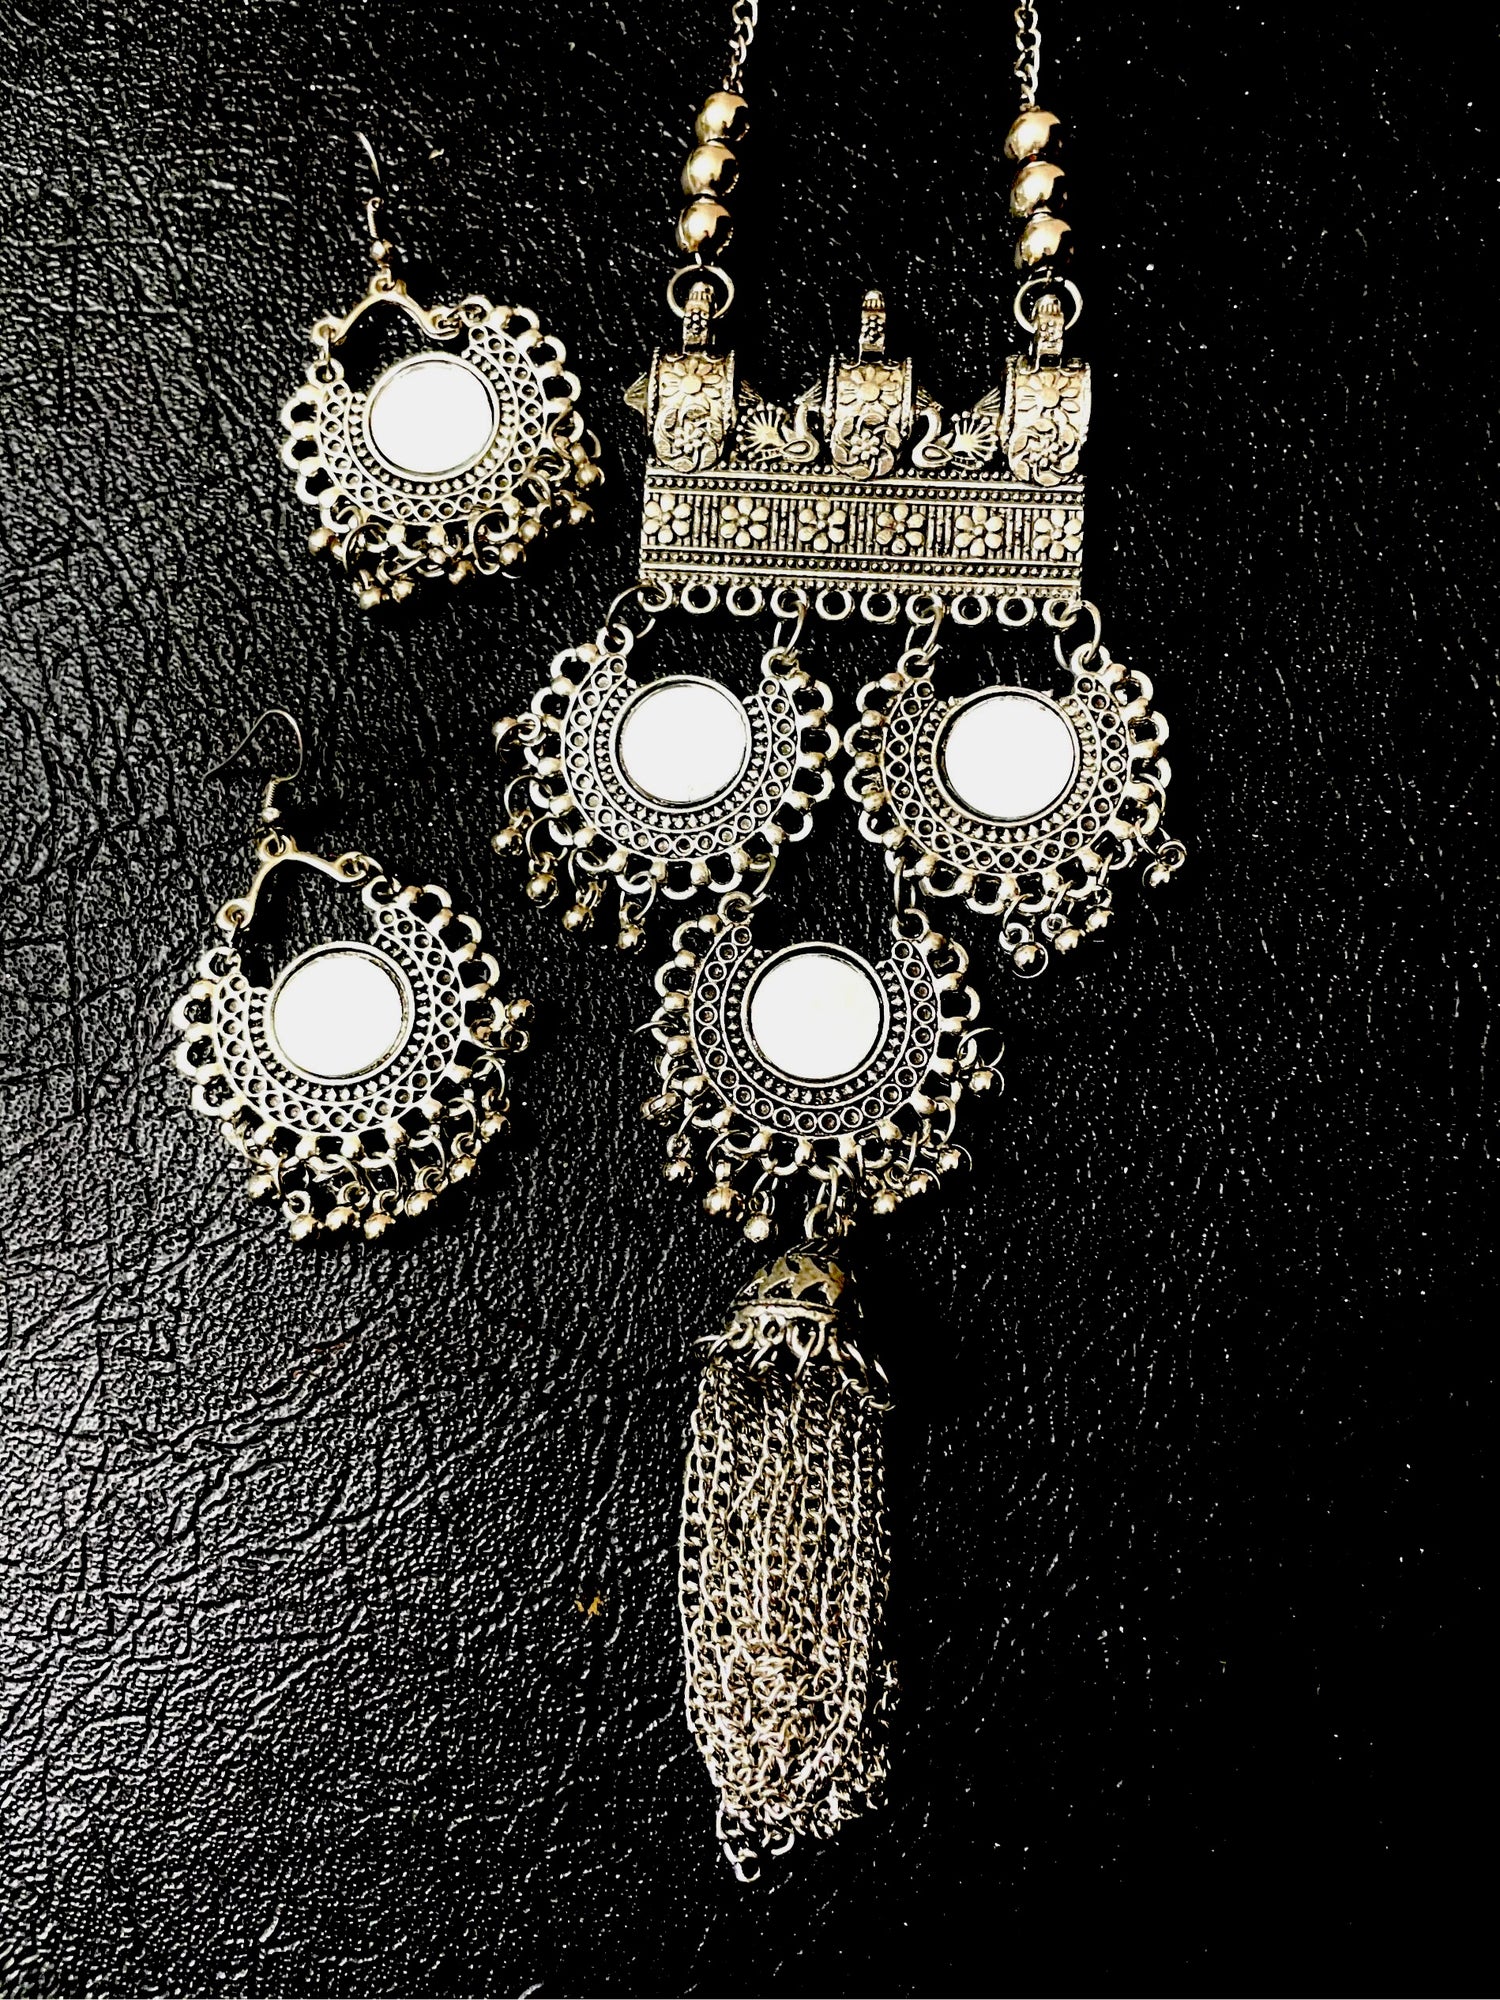 Necklace earrings Afgani mirror work oxidized jewelry women